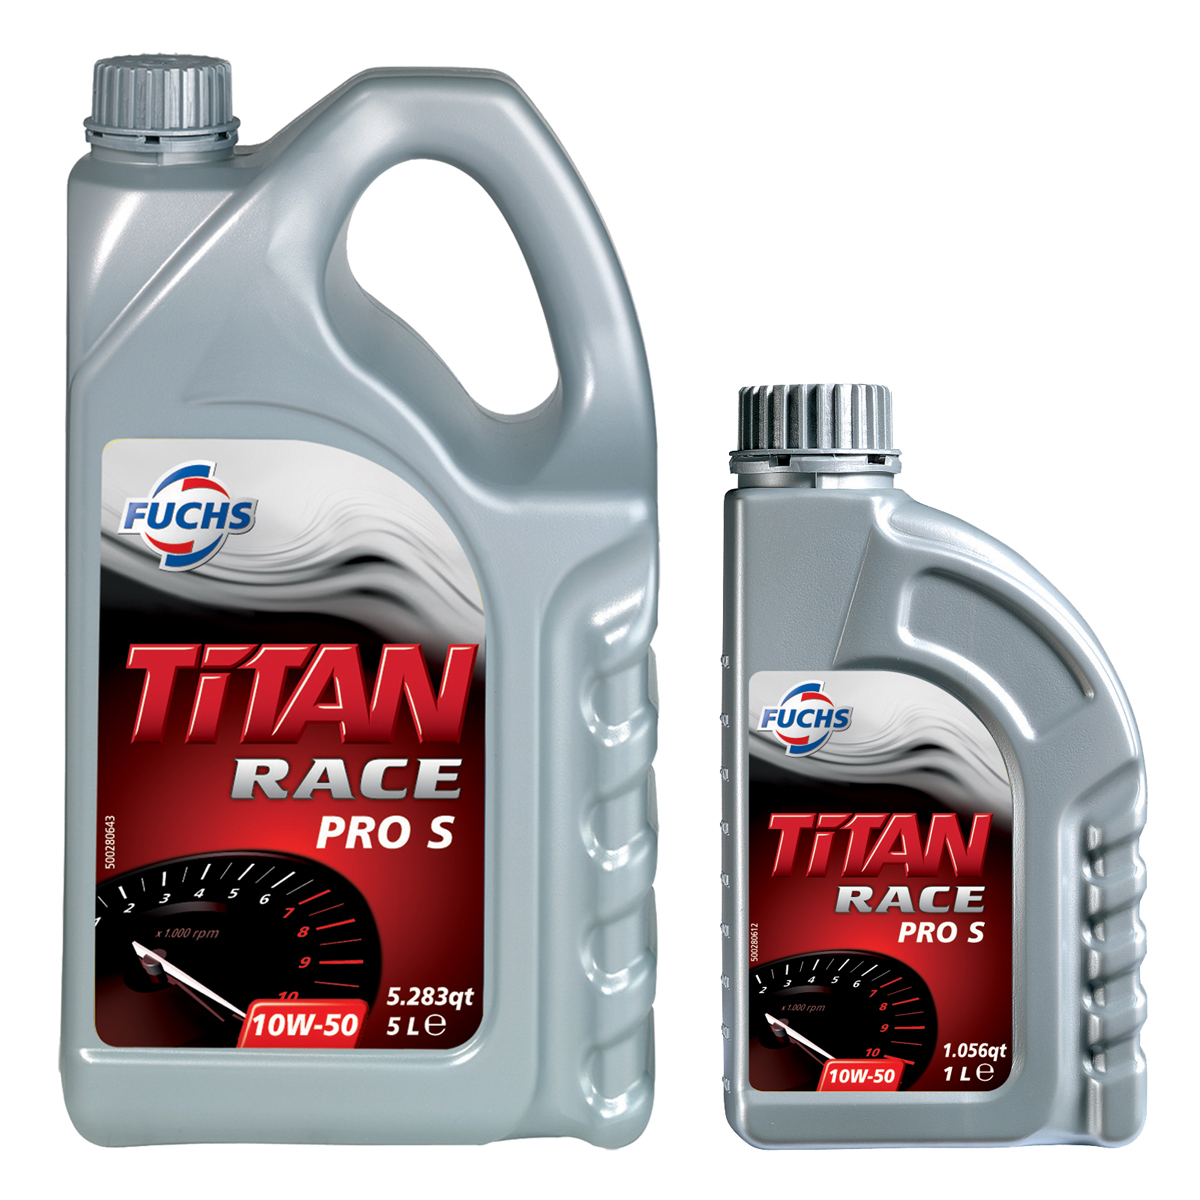 Fuchs Titan Race Pro S 10W50 Fully Synthetic Engine Oil